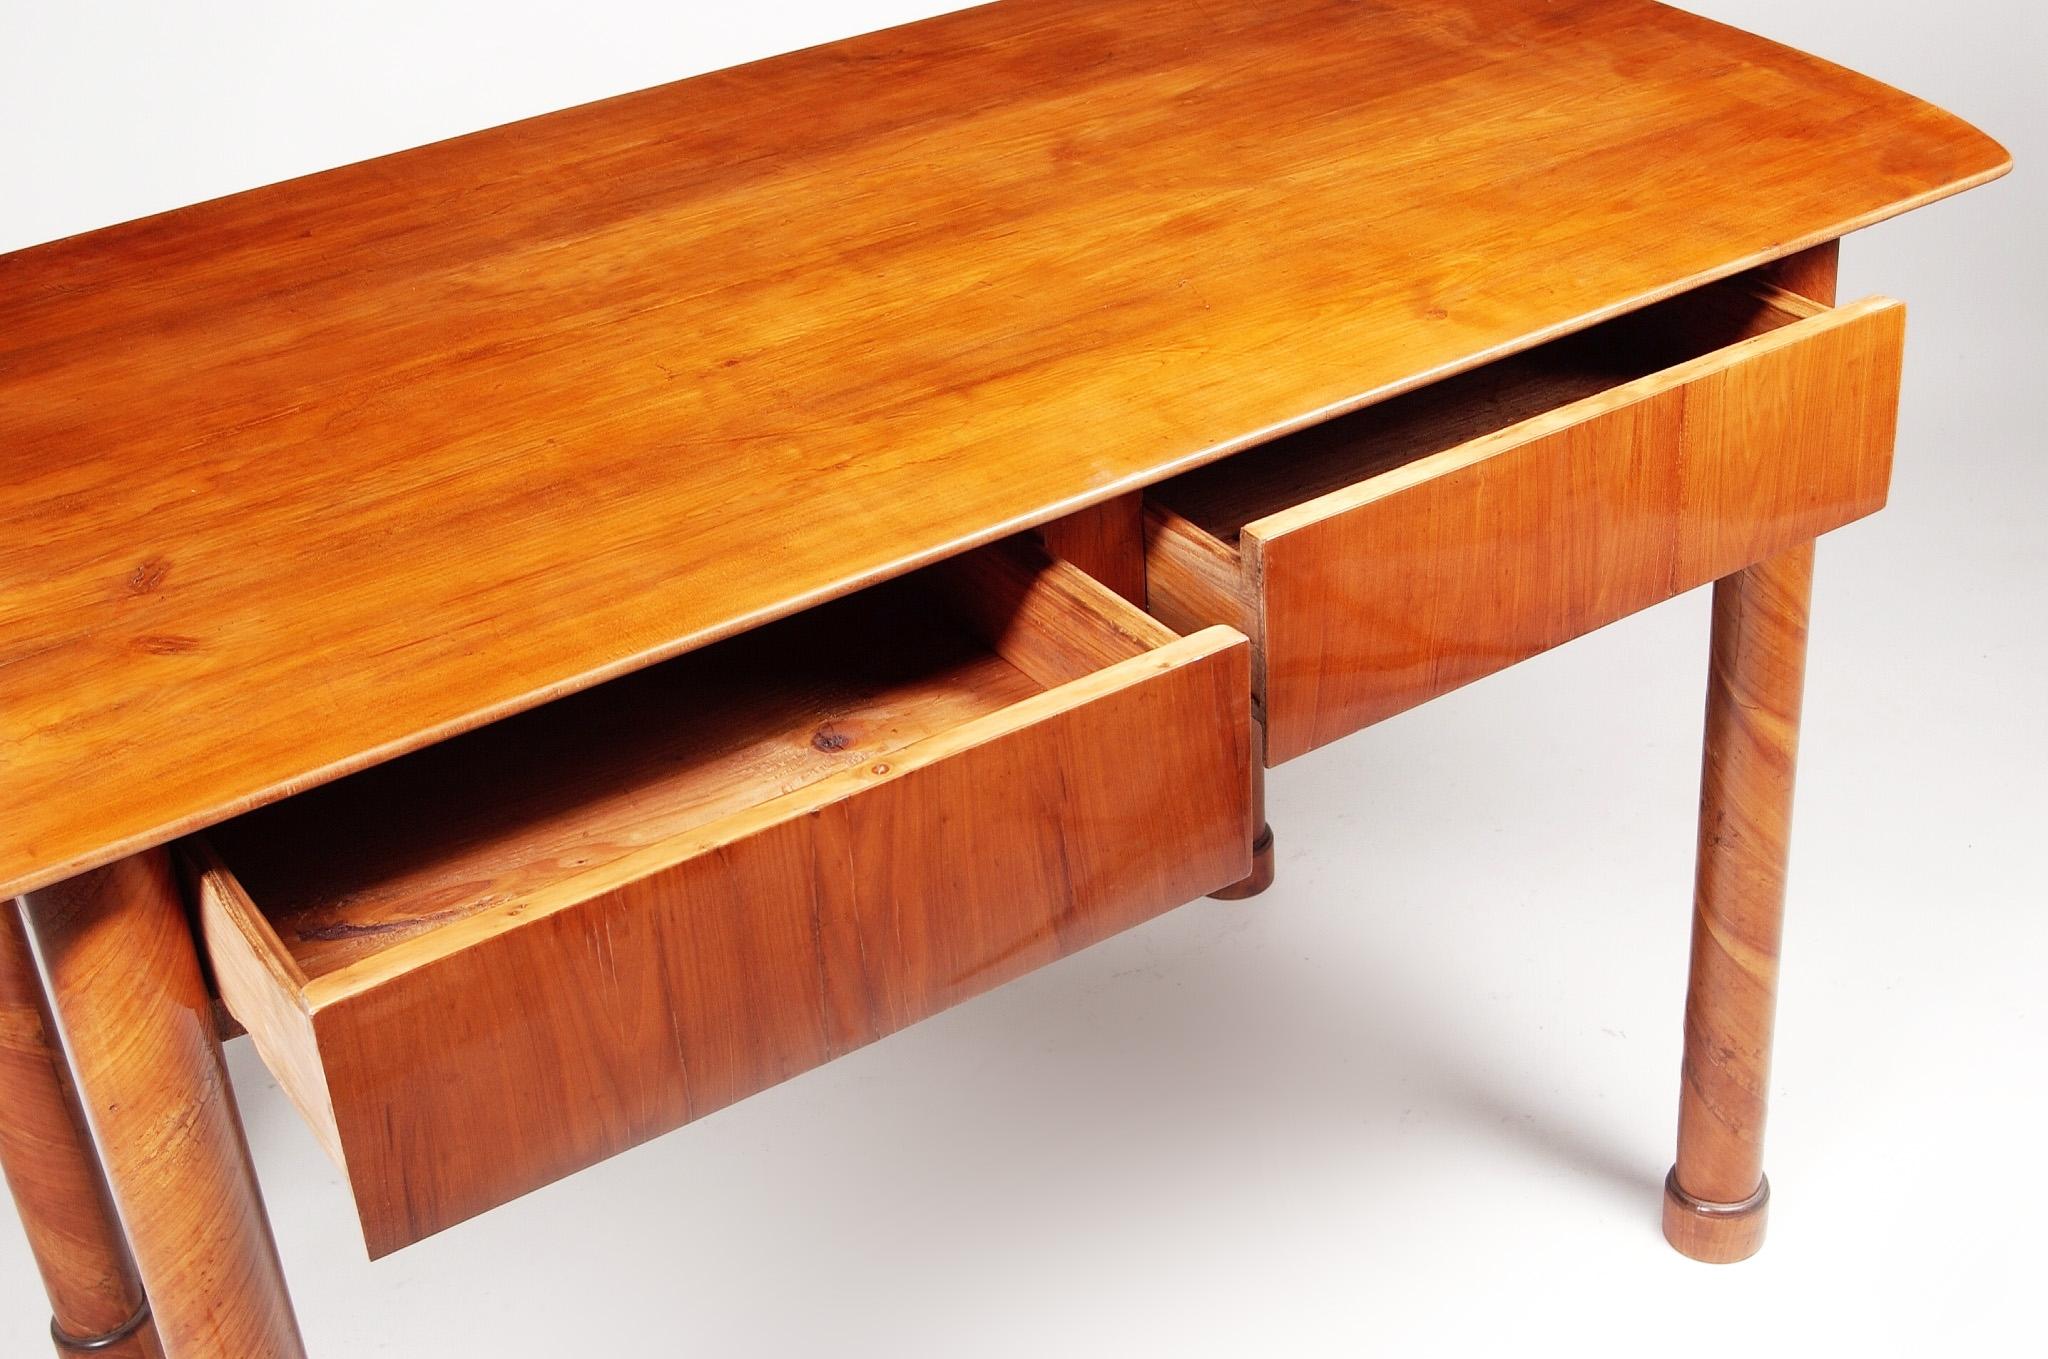 Biedermeier writing desk
Completely restored.
Shellac polish.
Material: Cherry tree
Period: 1830-1839.